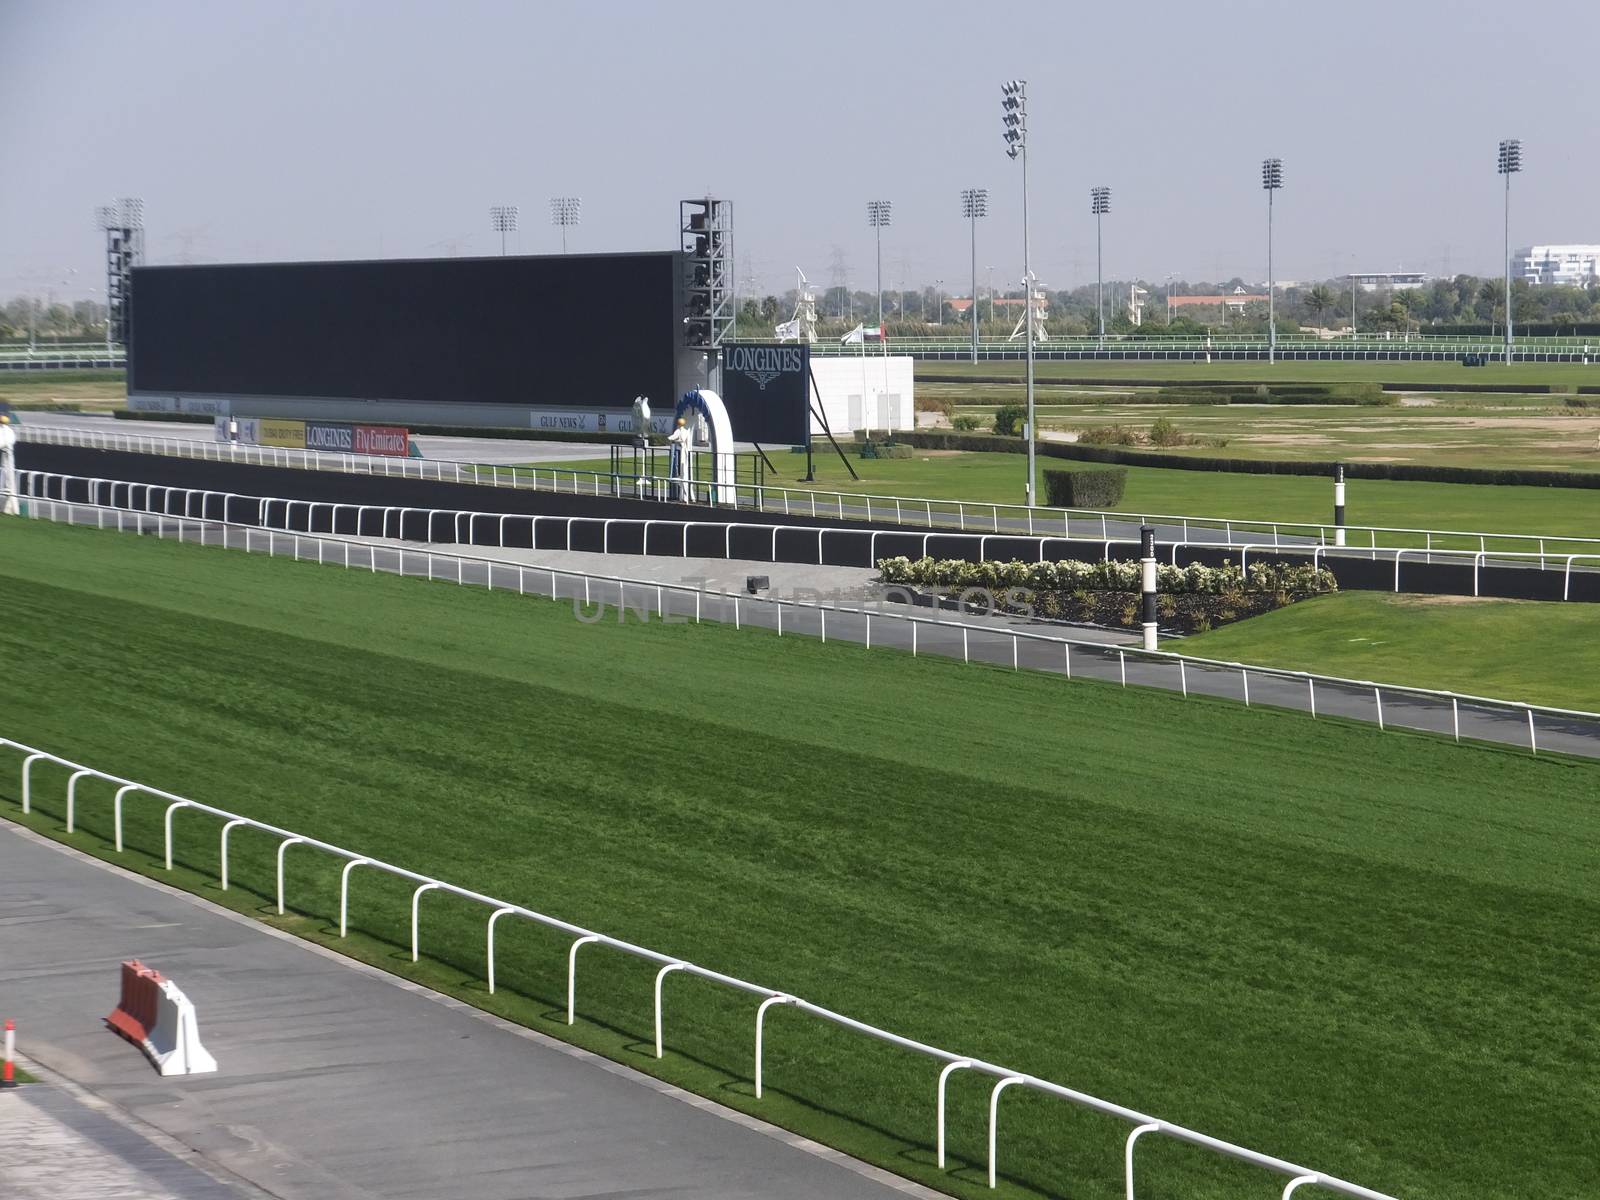 Meydan Racecourse in Dubai, UAE by sainaniritu